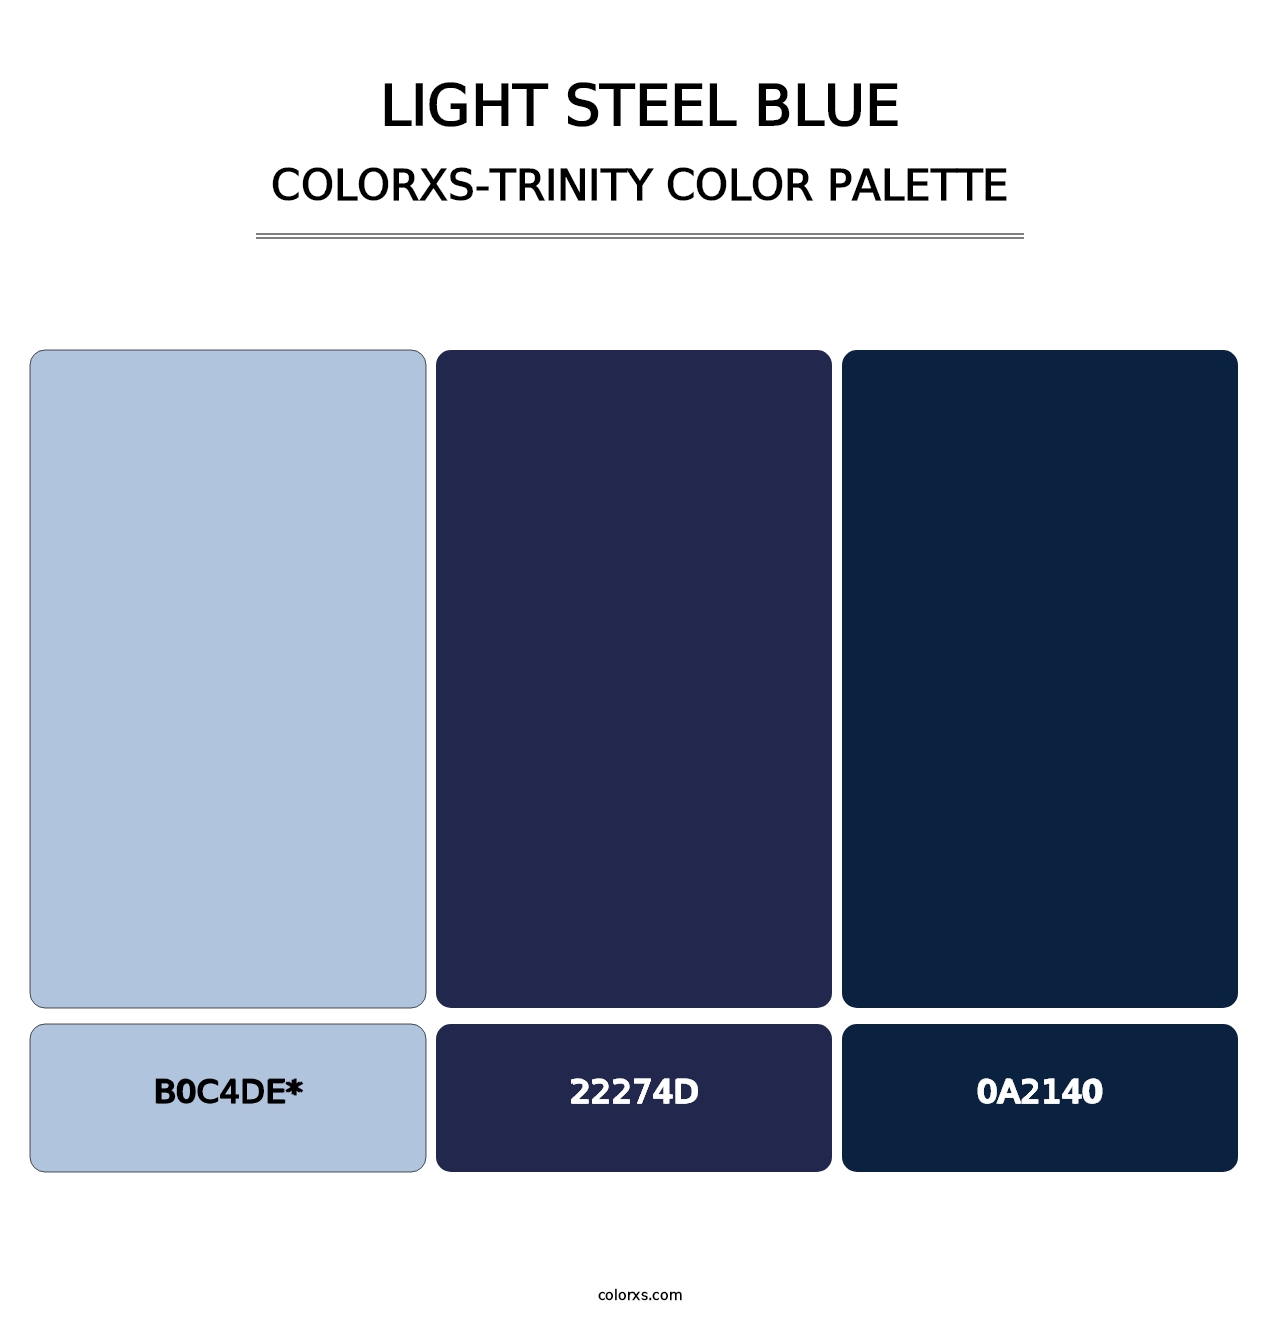 Light Steel Blue - Colorxs Trinity Palette